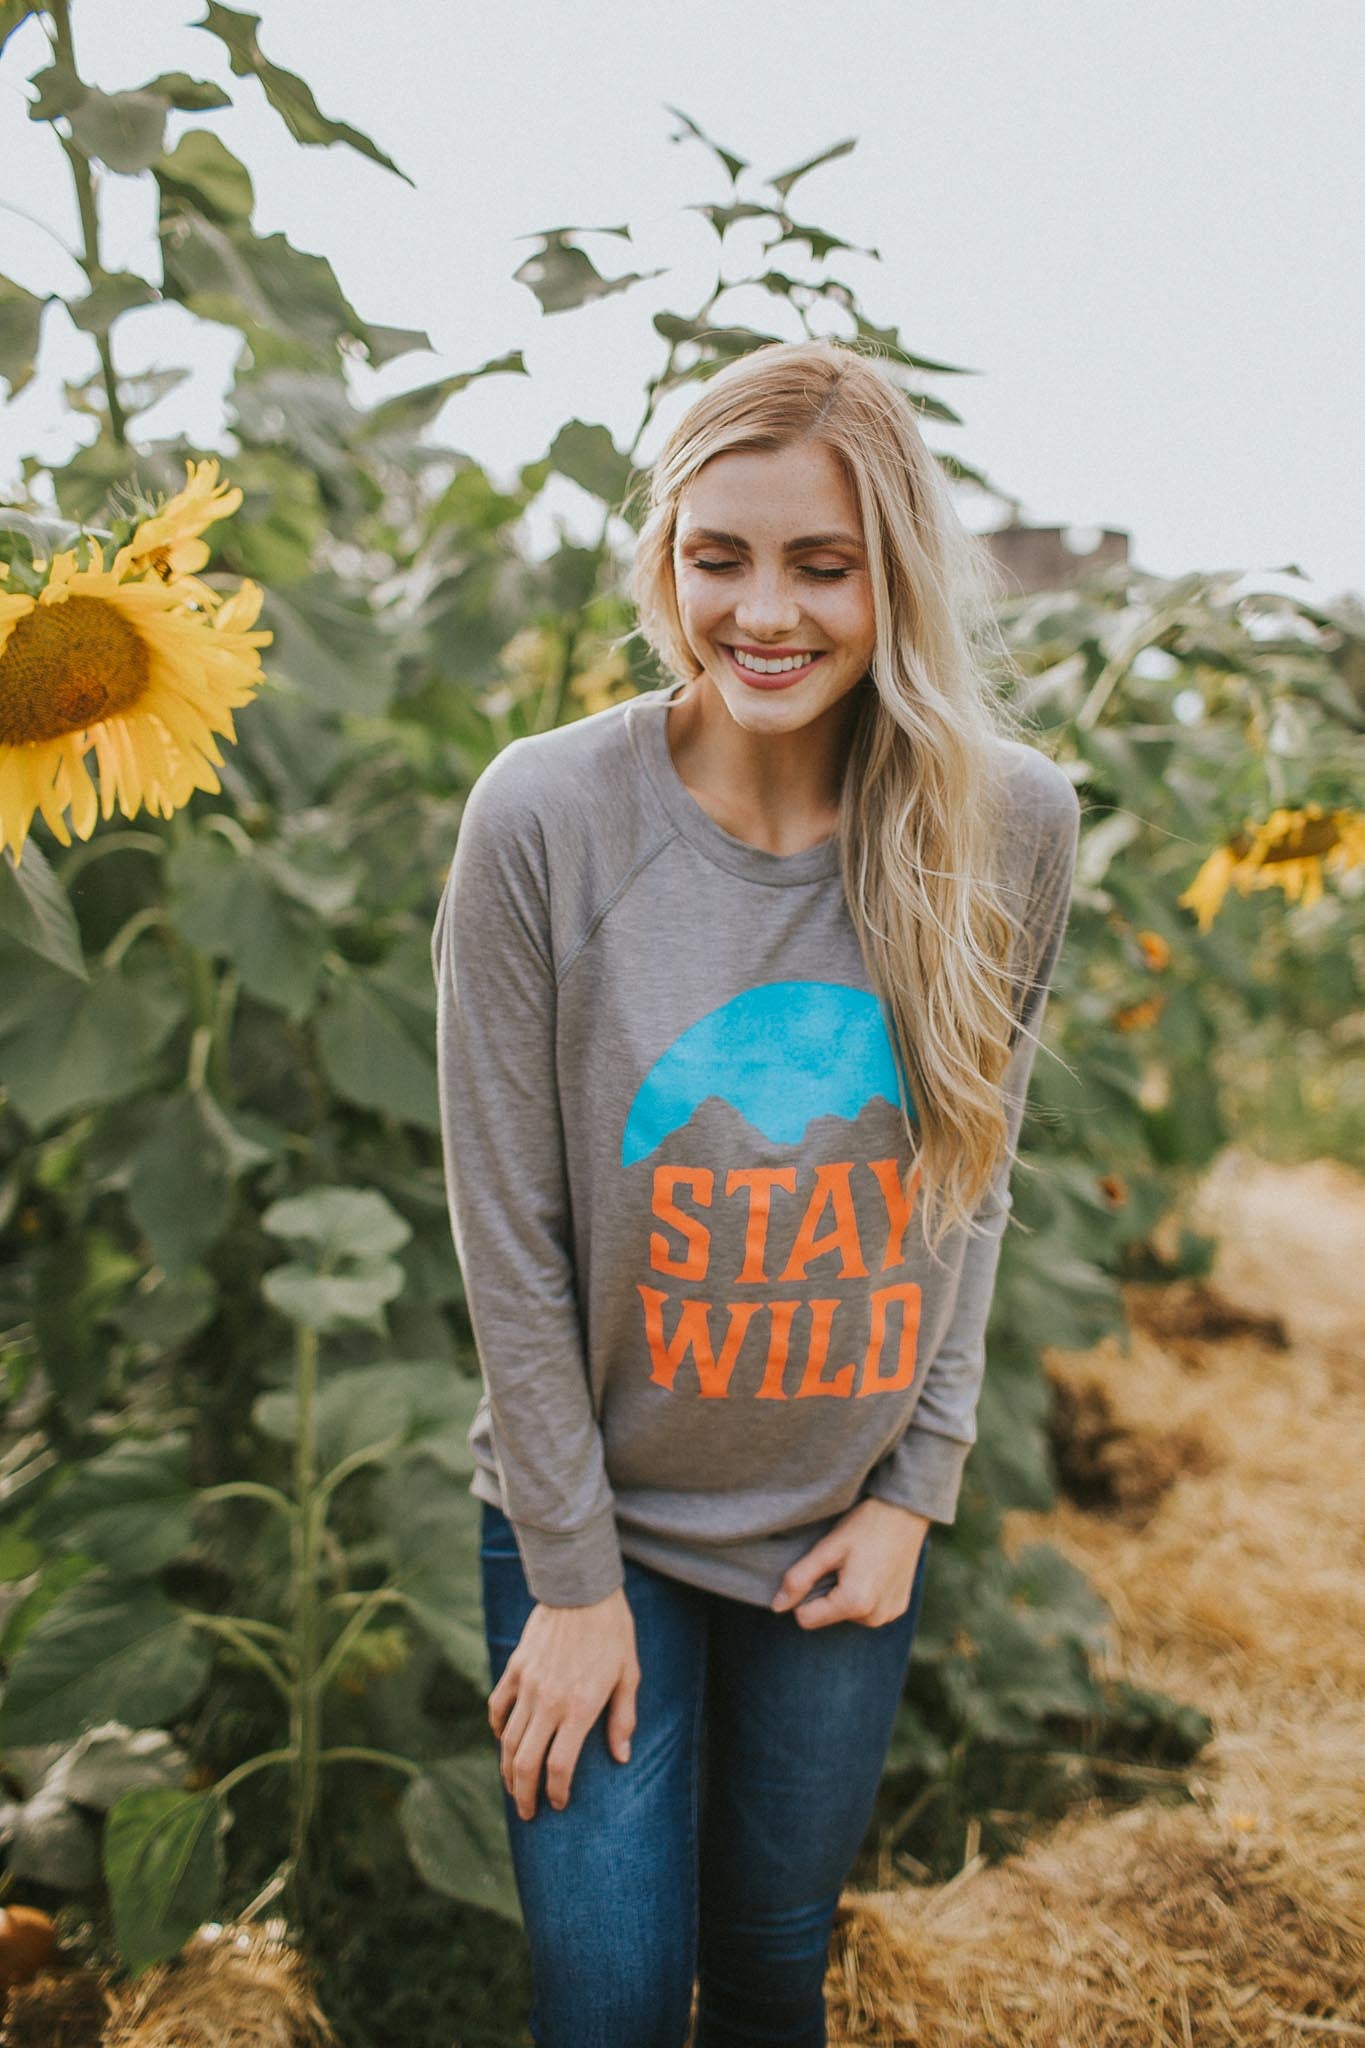 Stay Wild Sweatshirt Tee